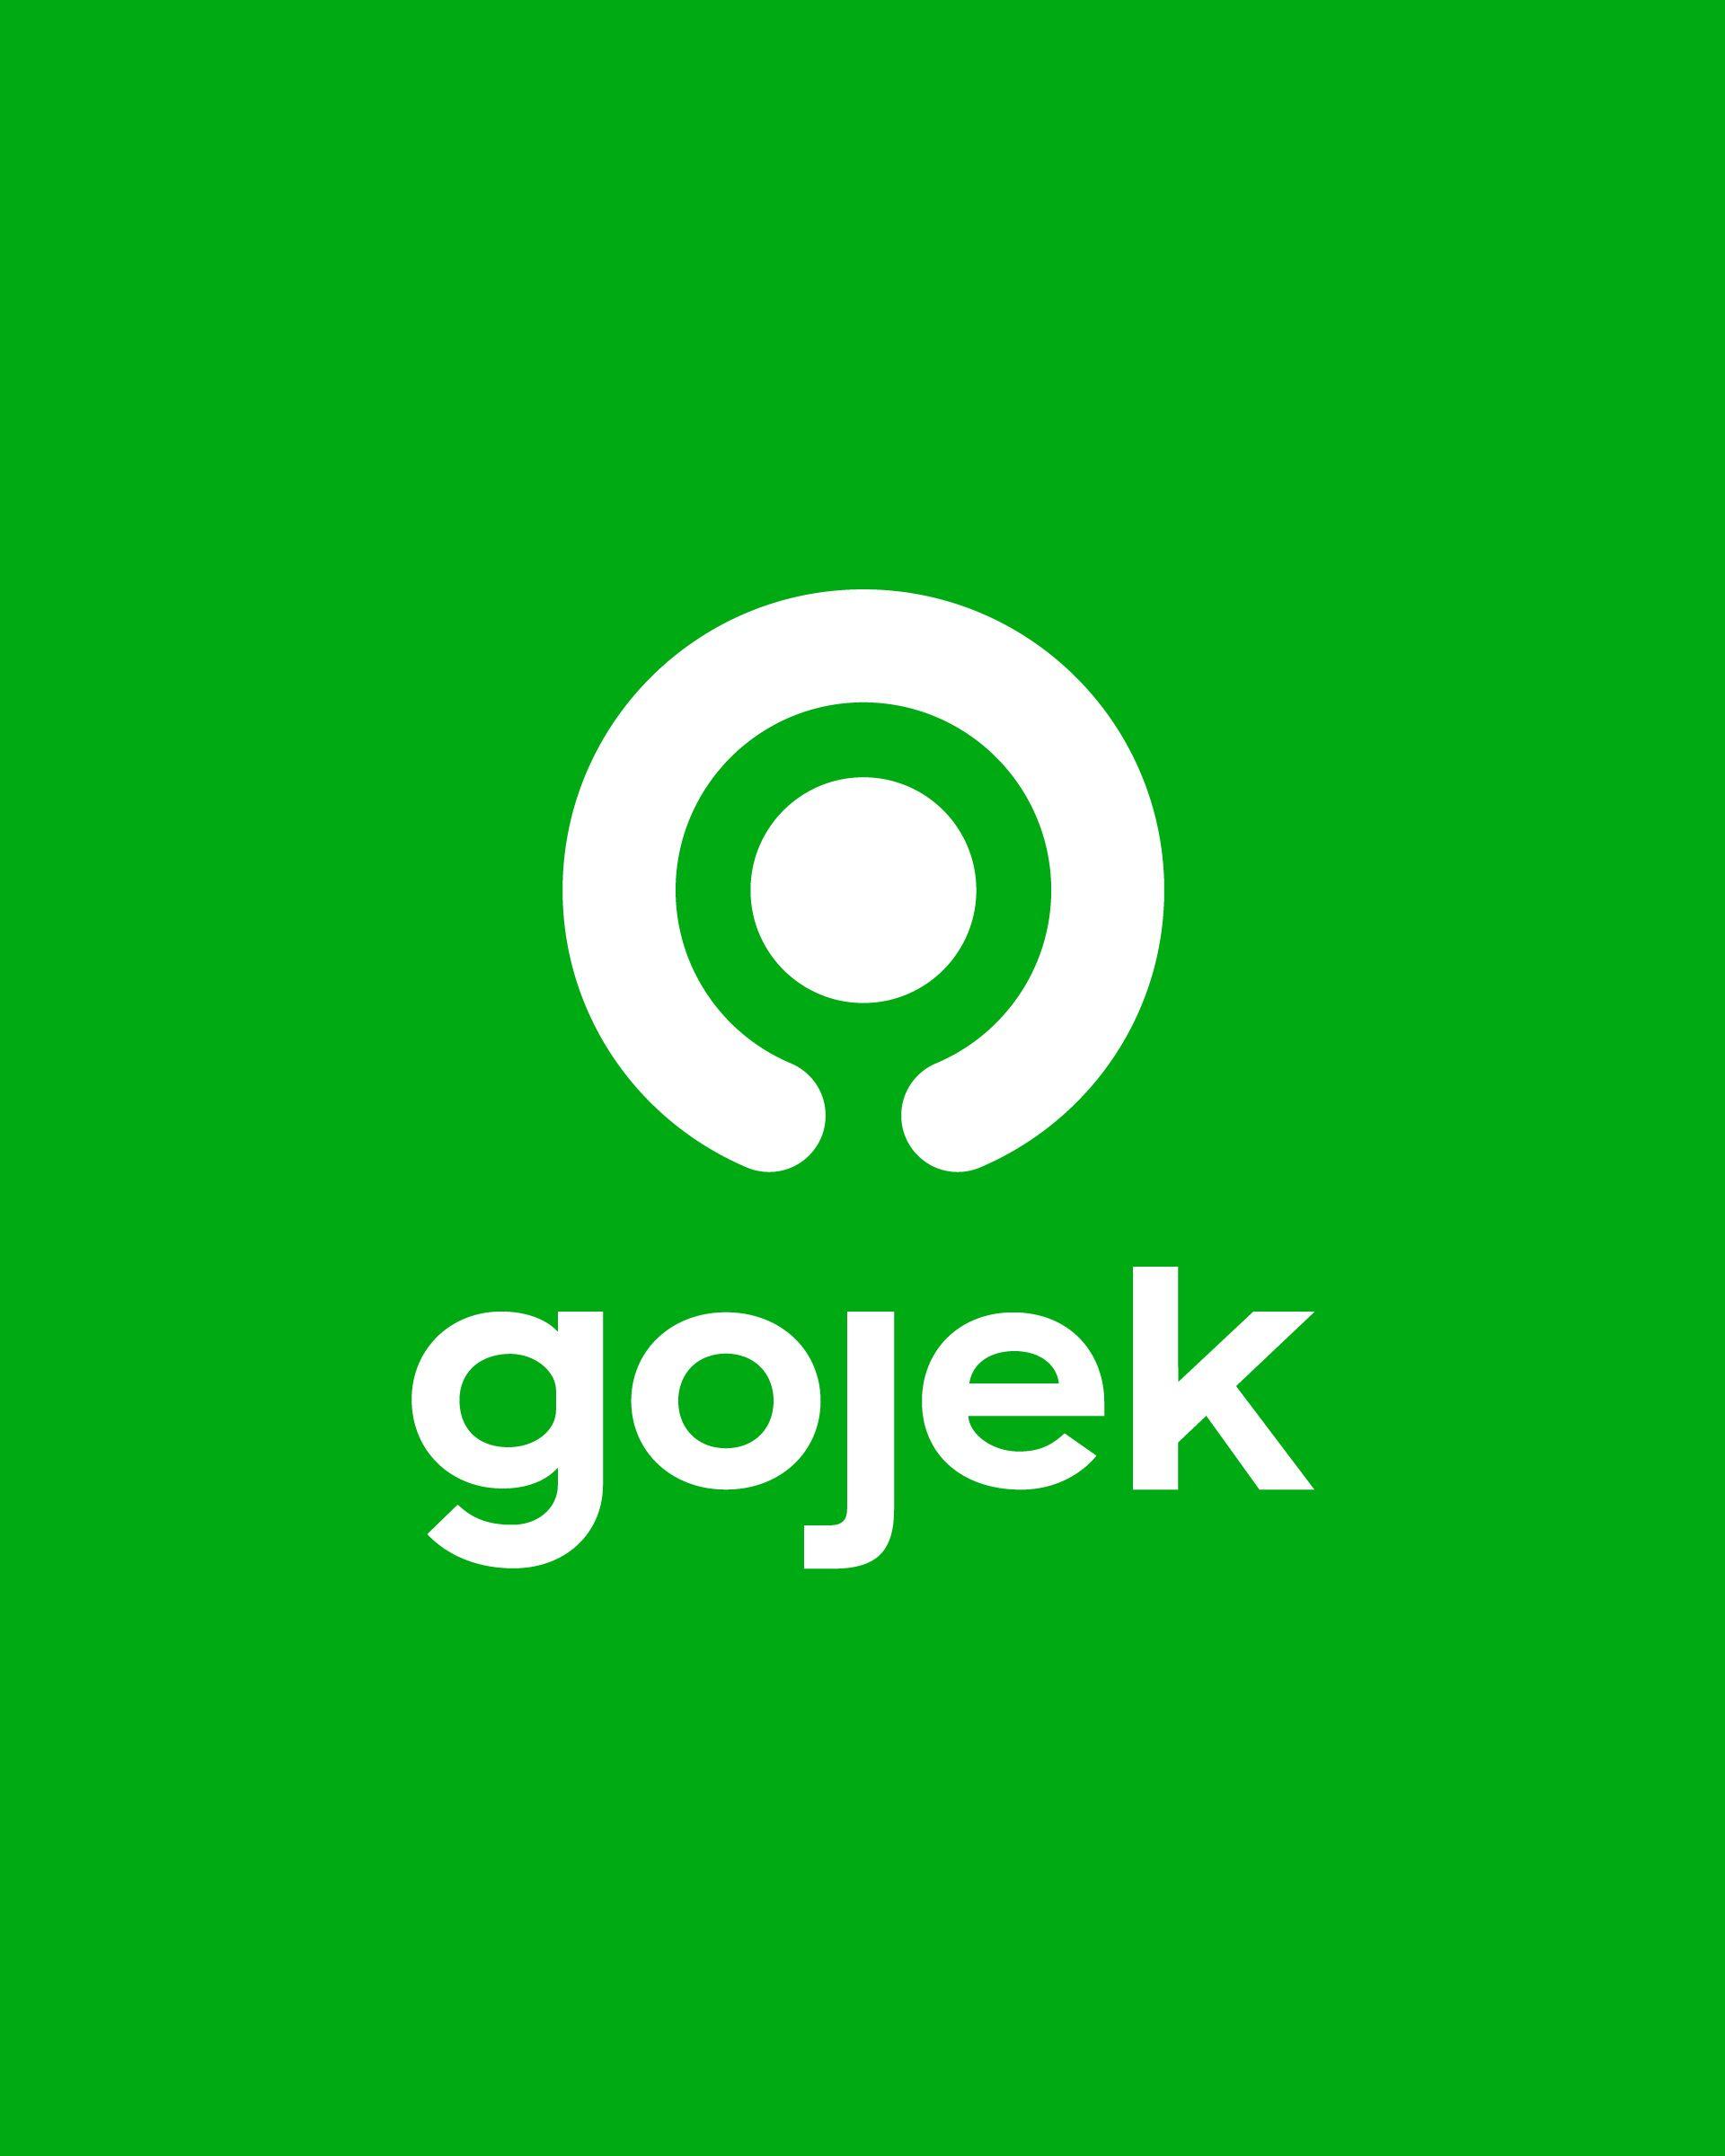 Gojek Logo - Gojek Vietnam